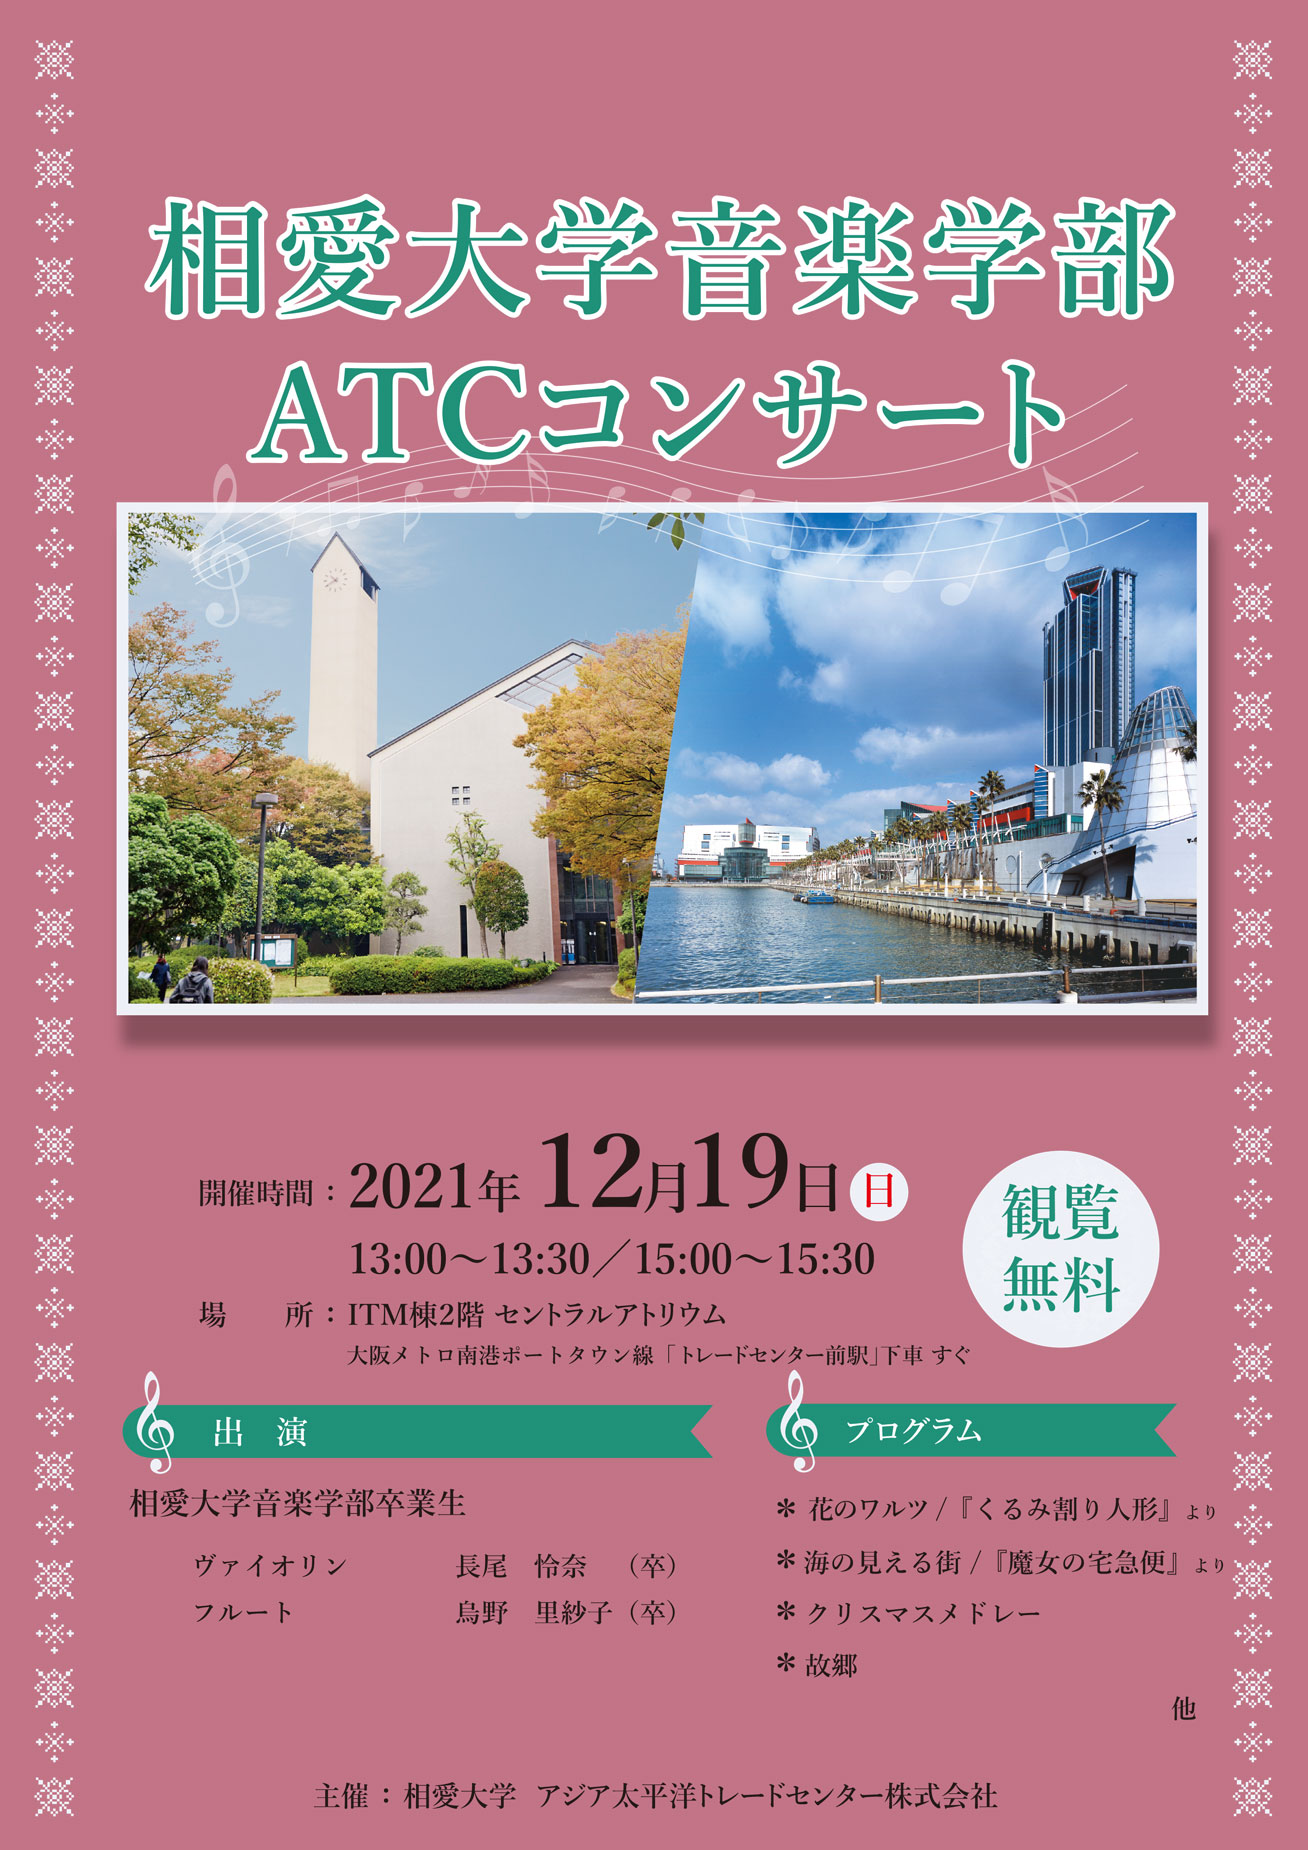 https://www.soai.ac.jp/information/event/20211219_atc-con_re.jpg